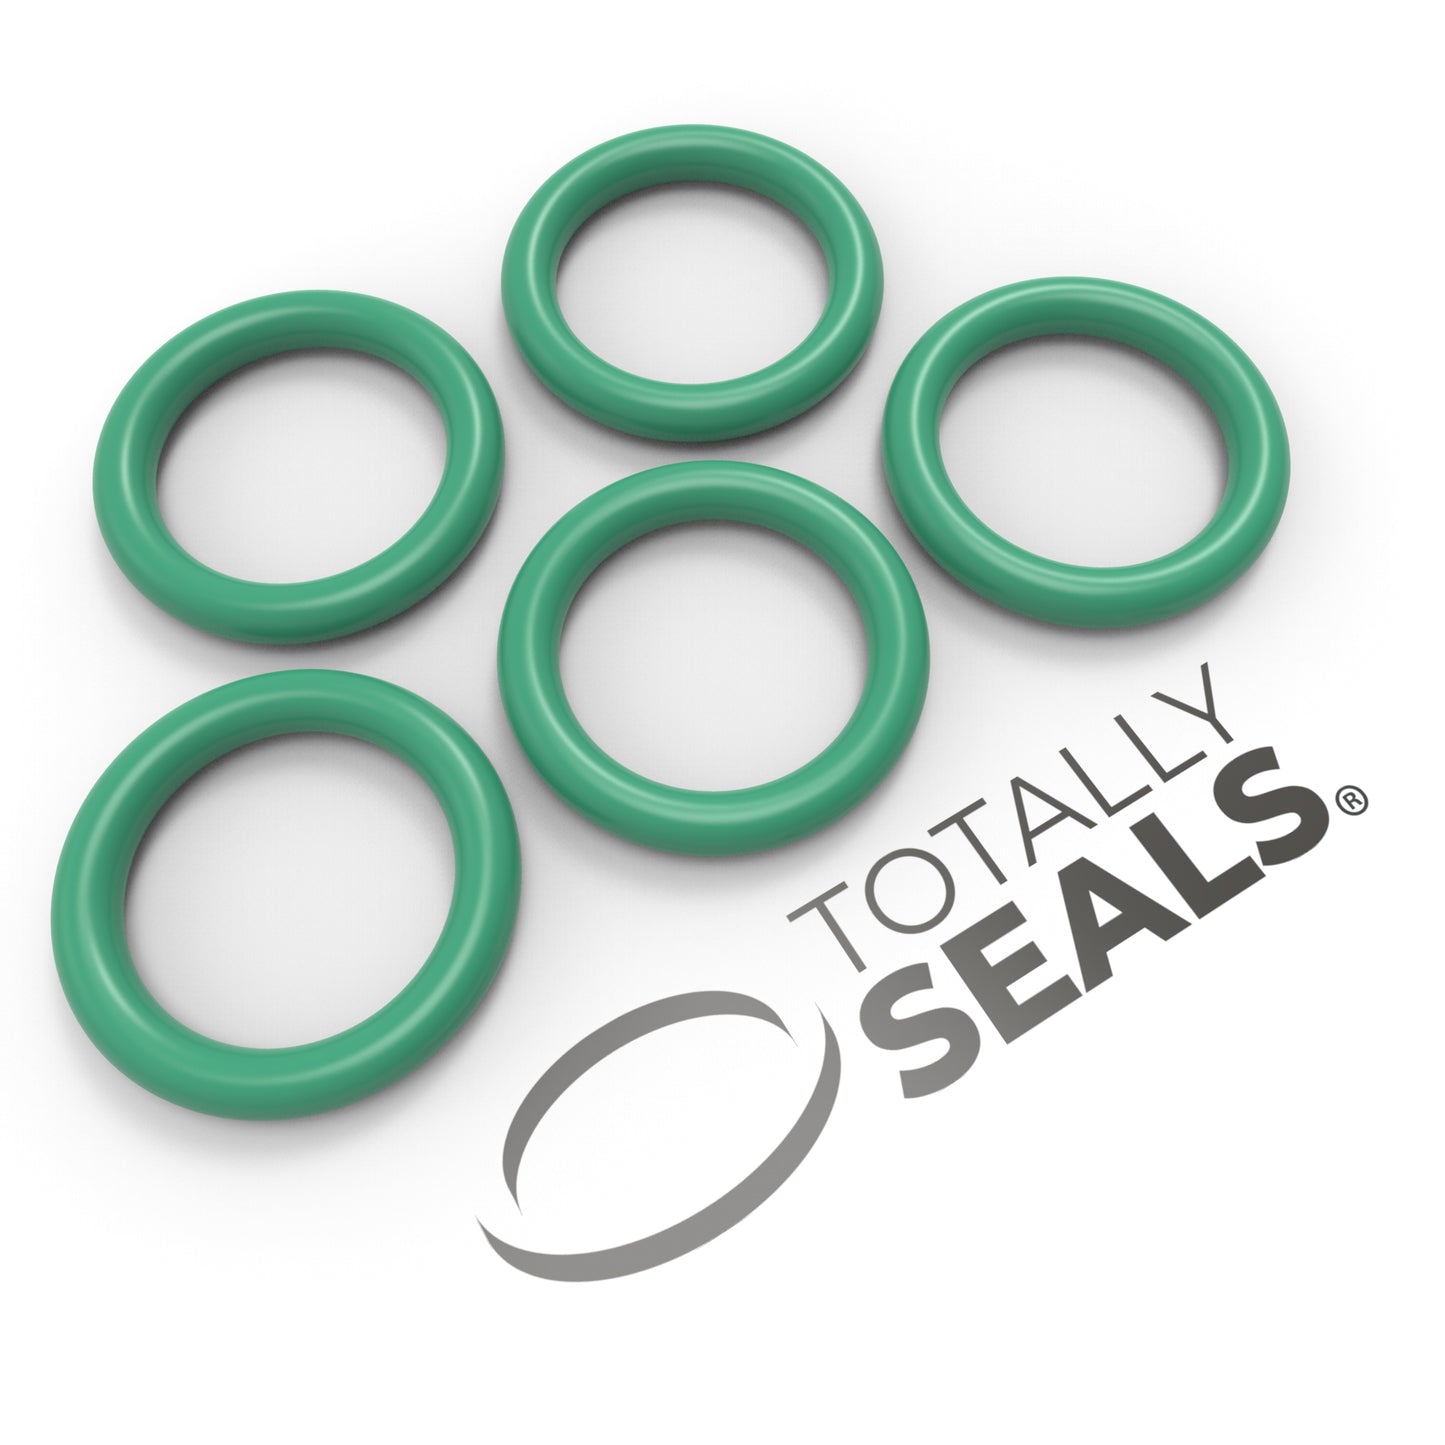 11mm x 2.5mm (16mm OD) FKM (Viton™) O-Rings - Totally Seals®